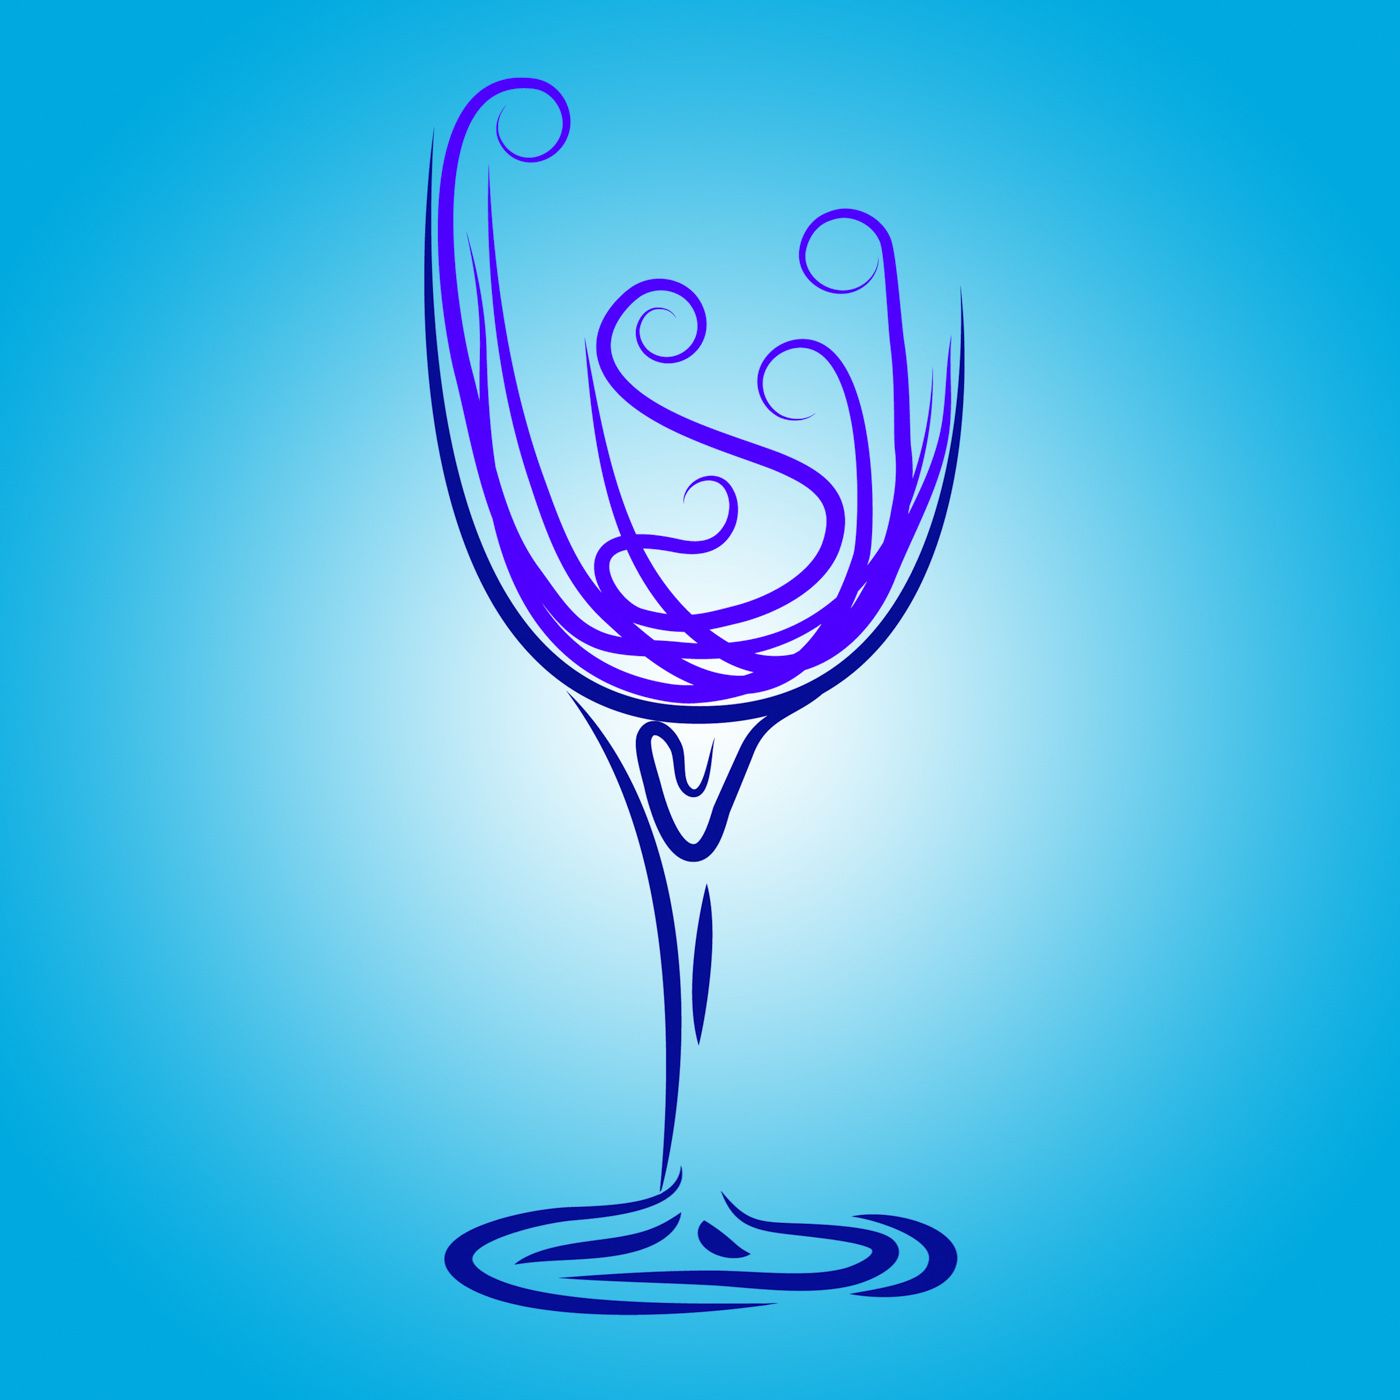 Wine glass shows wine-glass drink and celebrations photo